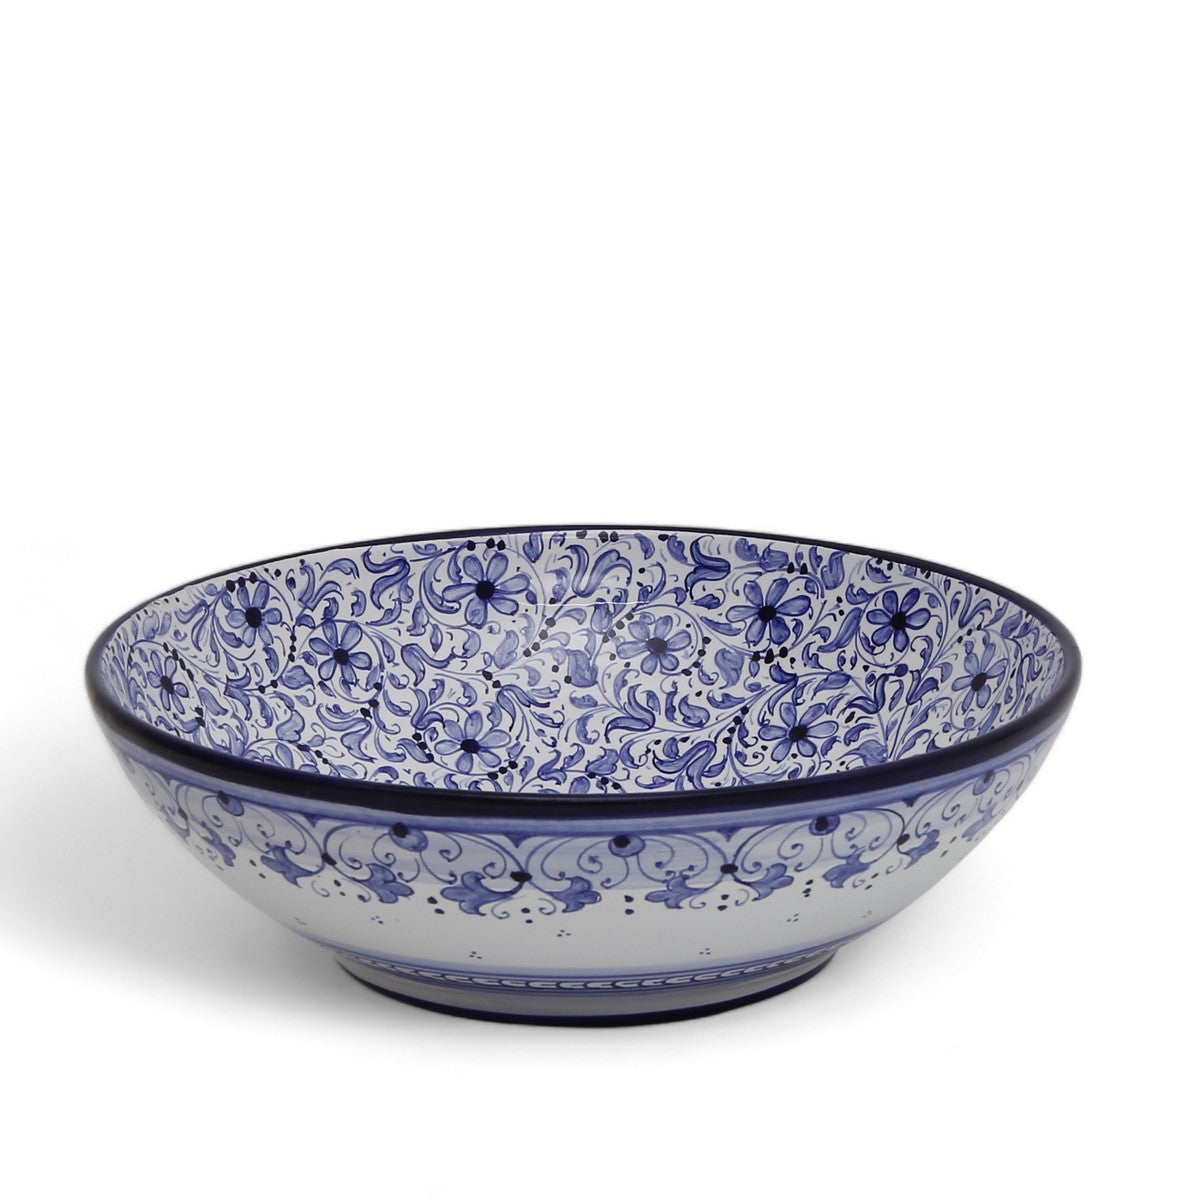 DERUTA MAJOLICA: Pasta/Salad Bowl adorned with sophisticated Blue Foliage Design